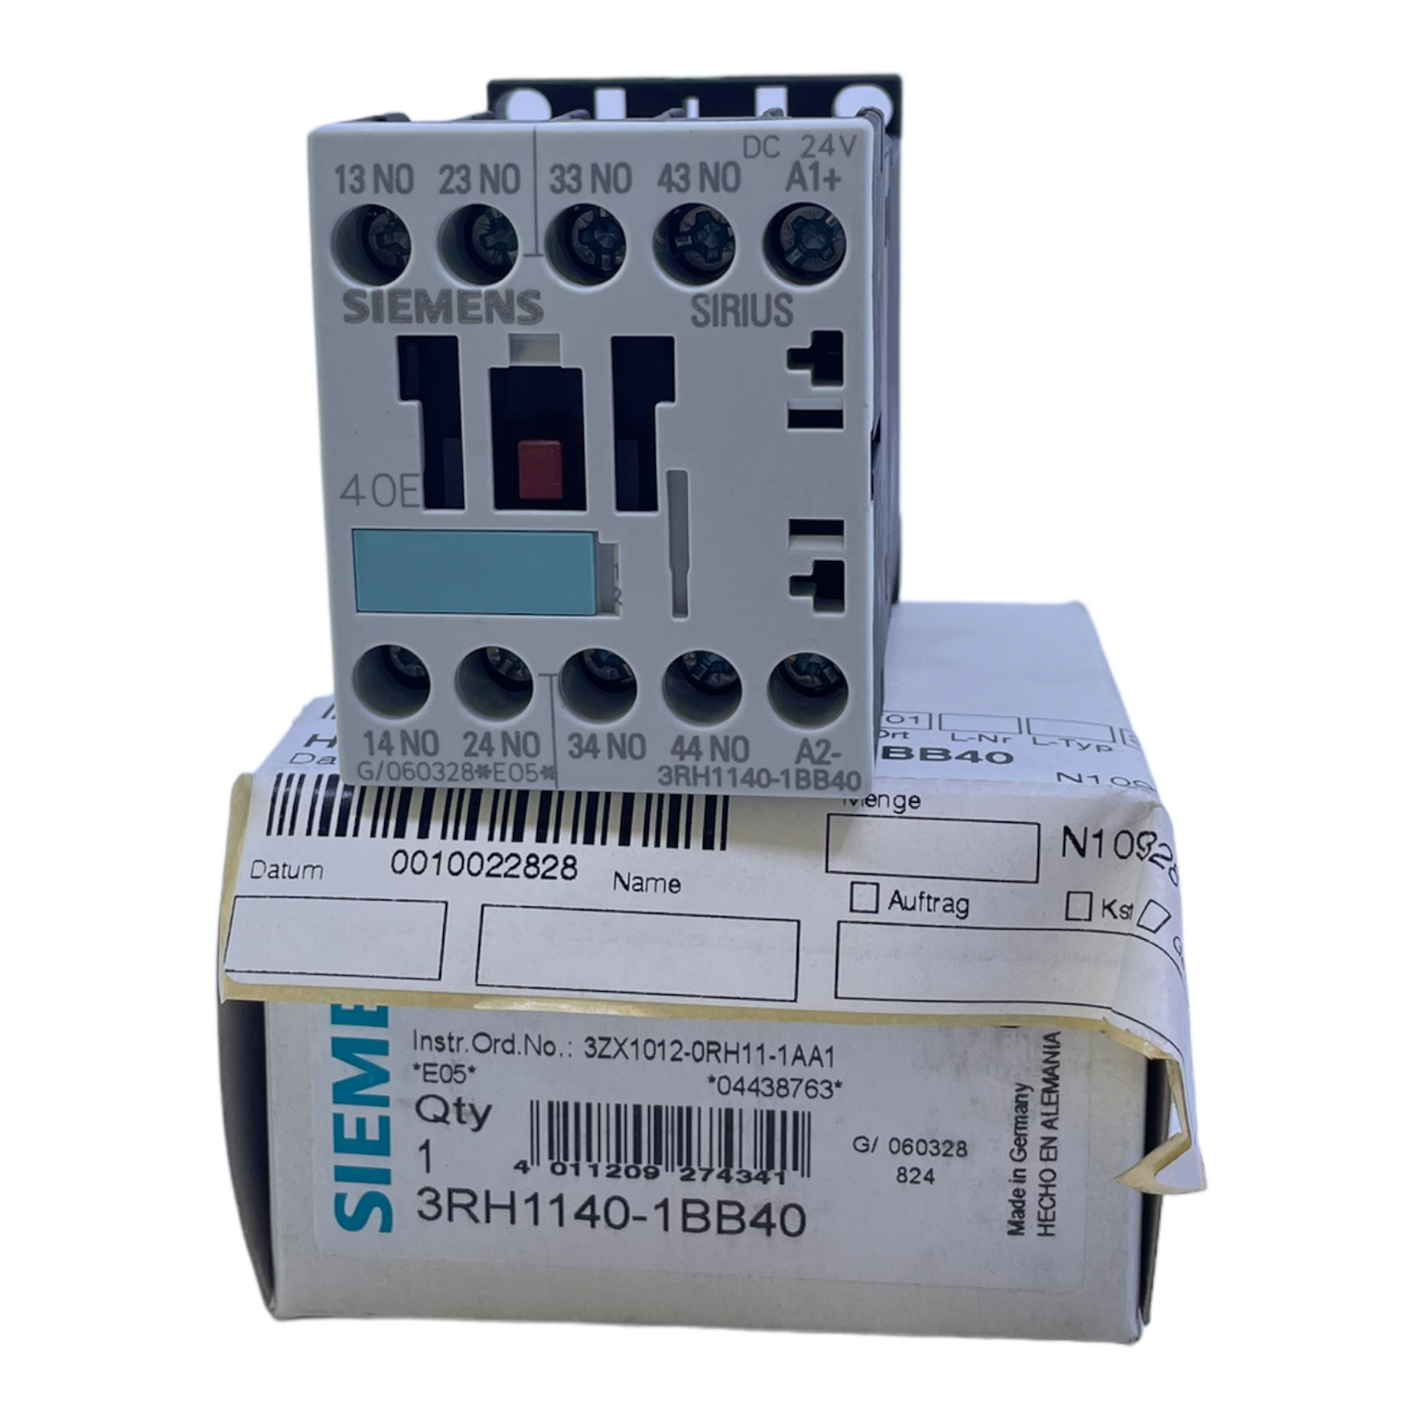 Siemens 3RH1140-1BB40 power contactor 24V DC